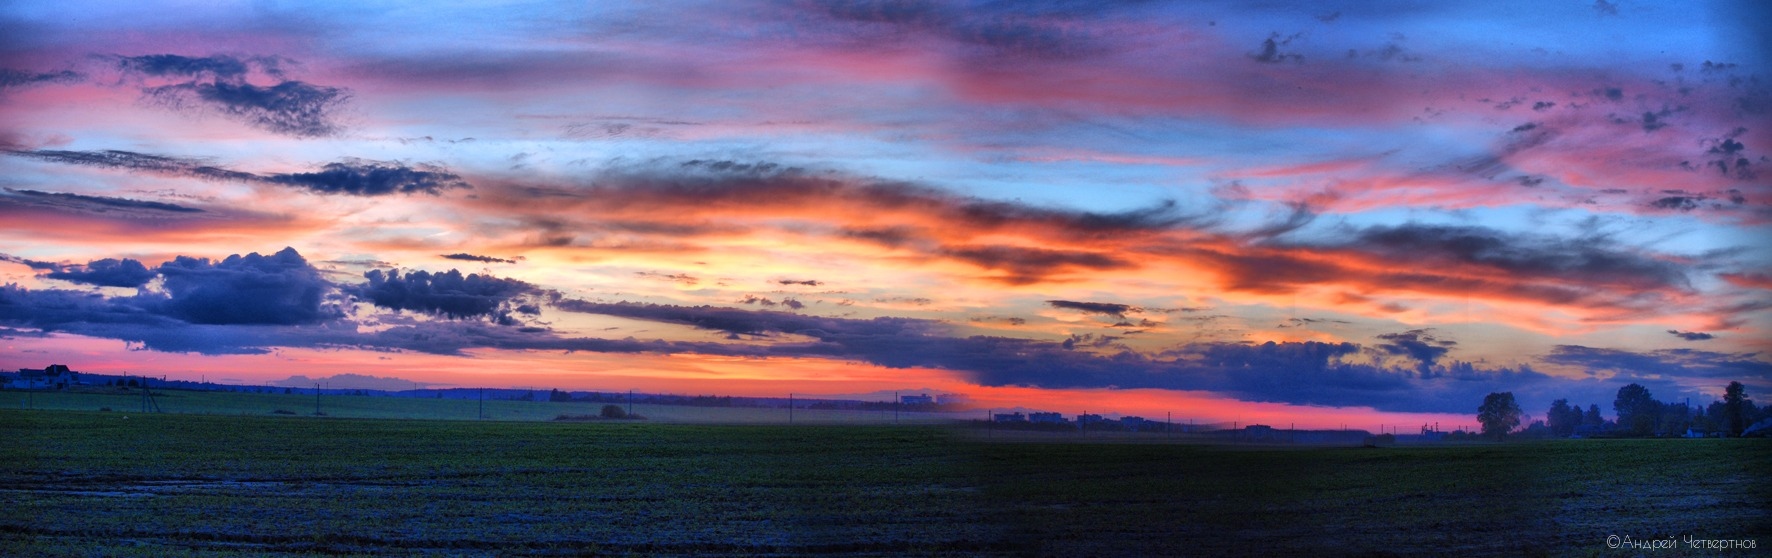 закат | Фотограф Андрей Четвертнов | foto.by фото.бай